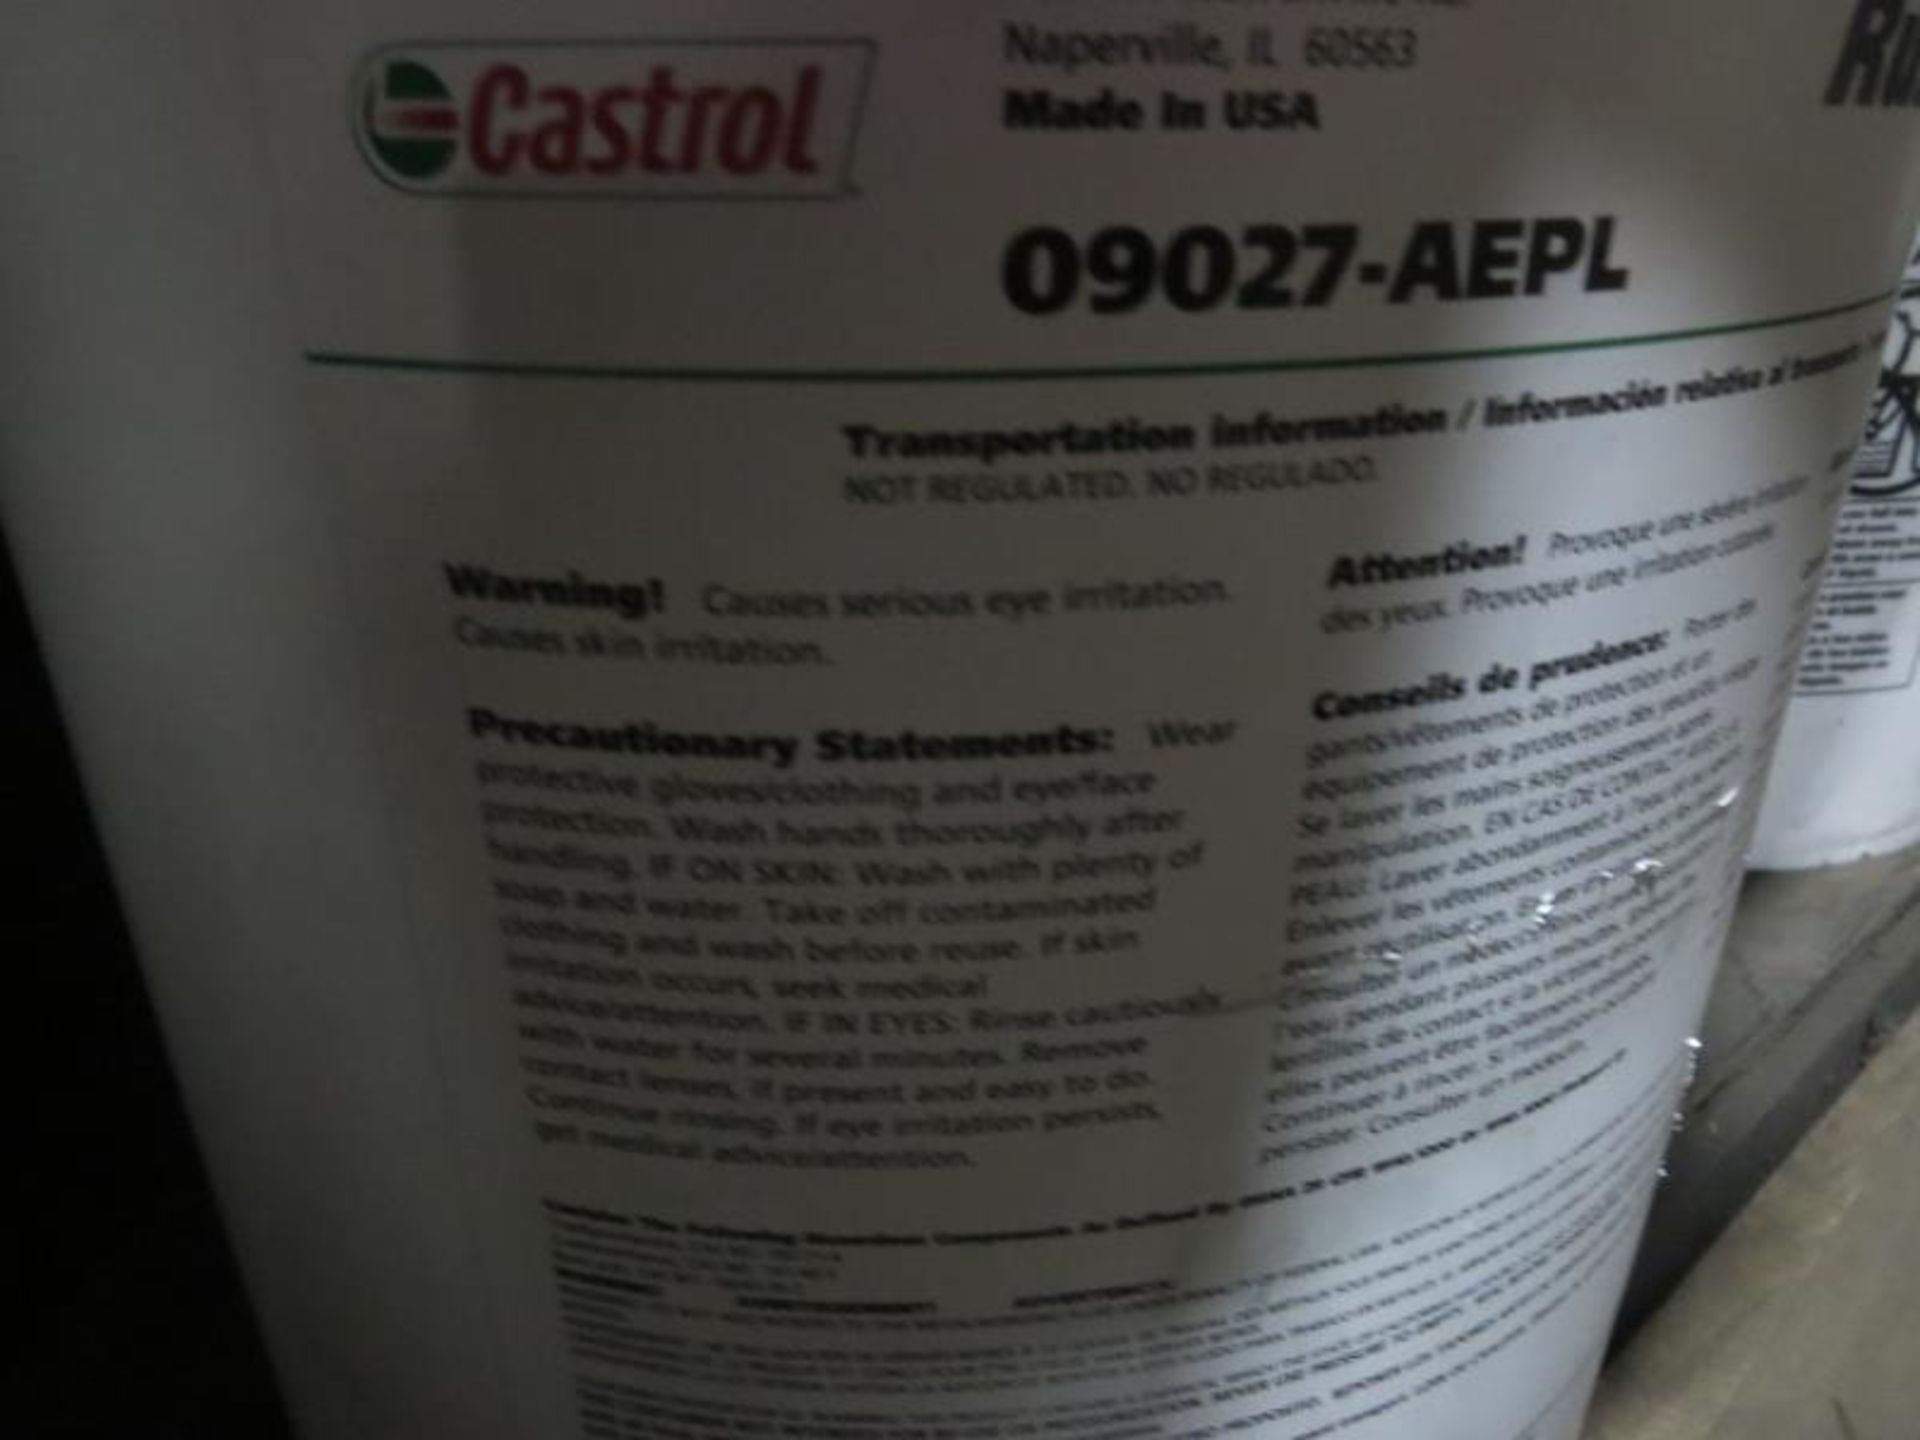 Lot (Qty 4) 5 gal buckets Rustilo 4175 and Castrol Industrial 09027-AEPL. Hit # 2202994. Bldg.1 - Image 4 of 4